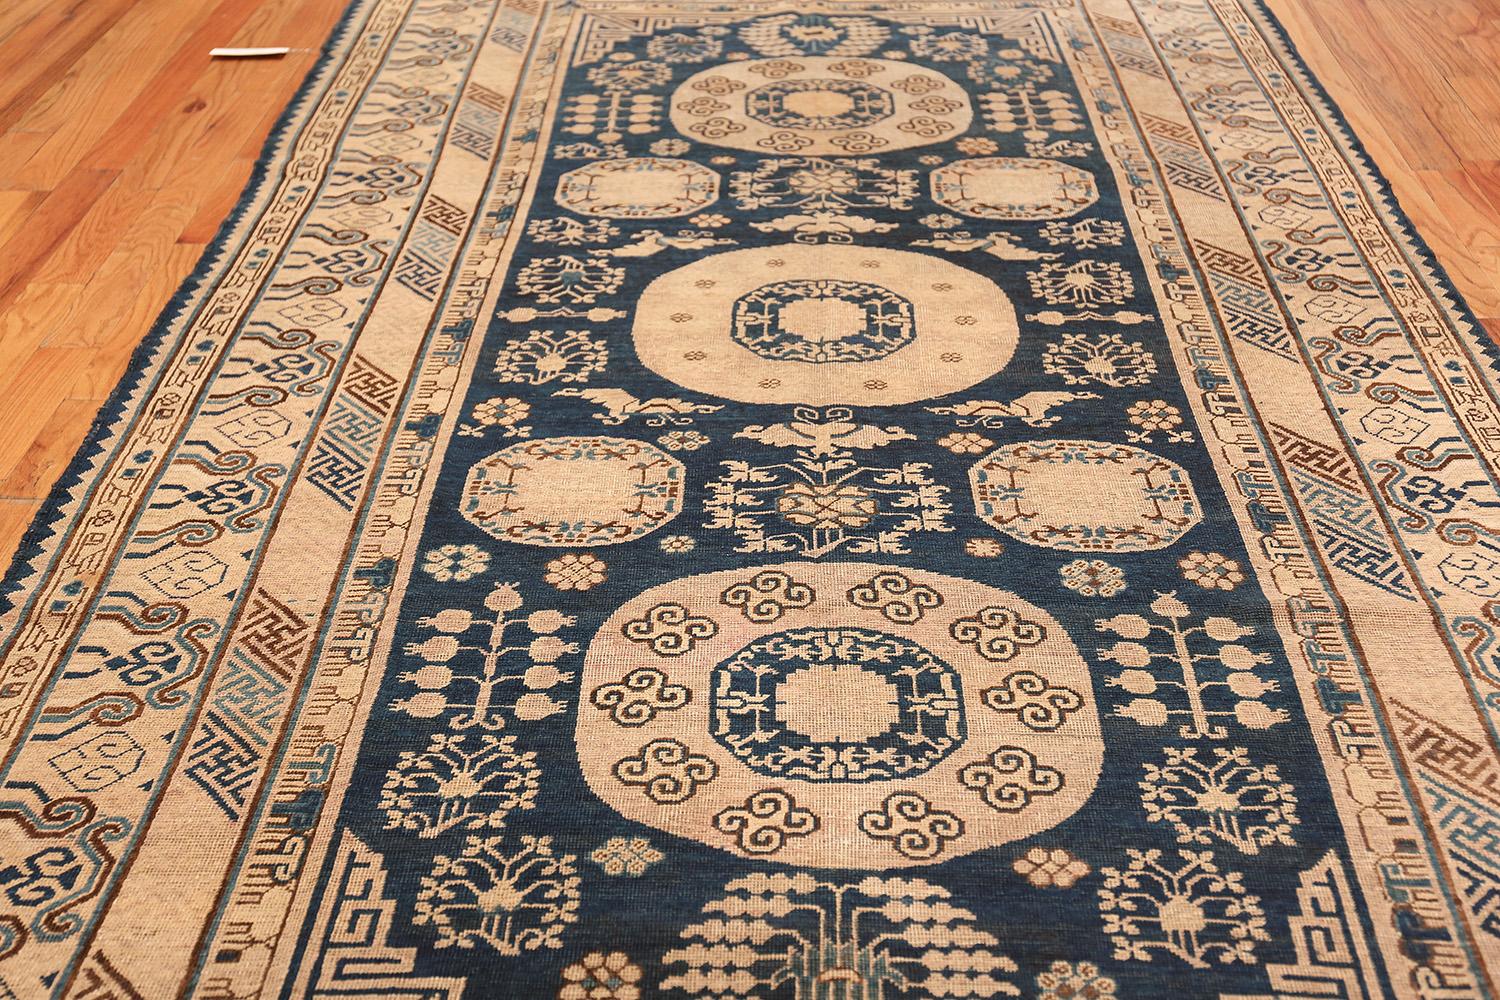 19th Century Nazmiyal Collection Antique Khotan Samarkand Oriental Rug. 6 ft x 12 ft 3 in